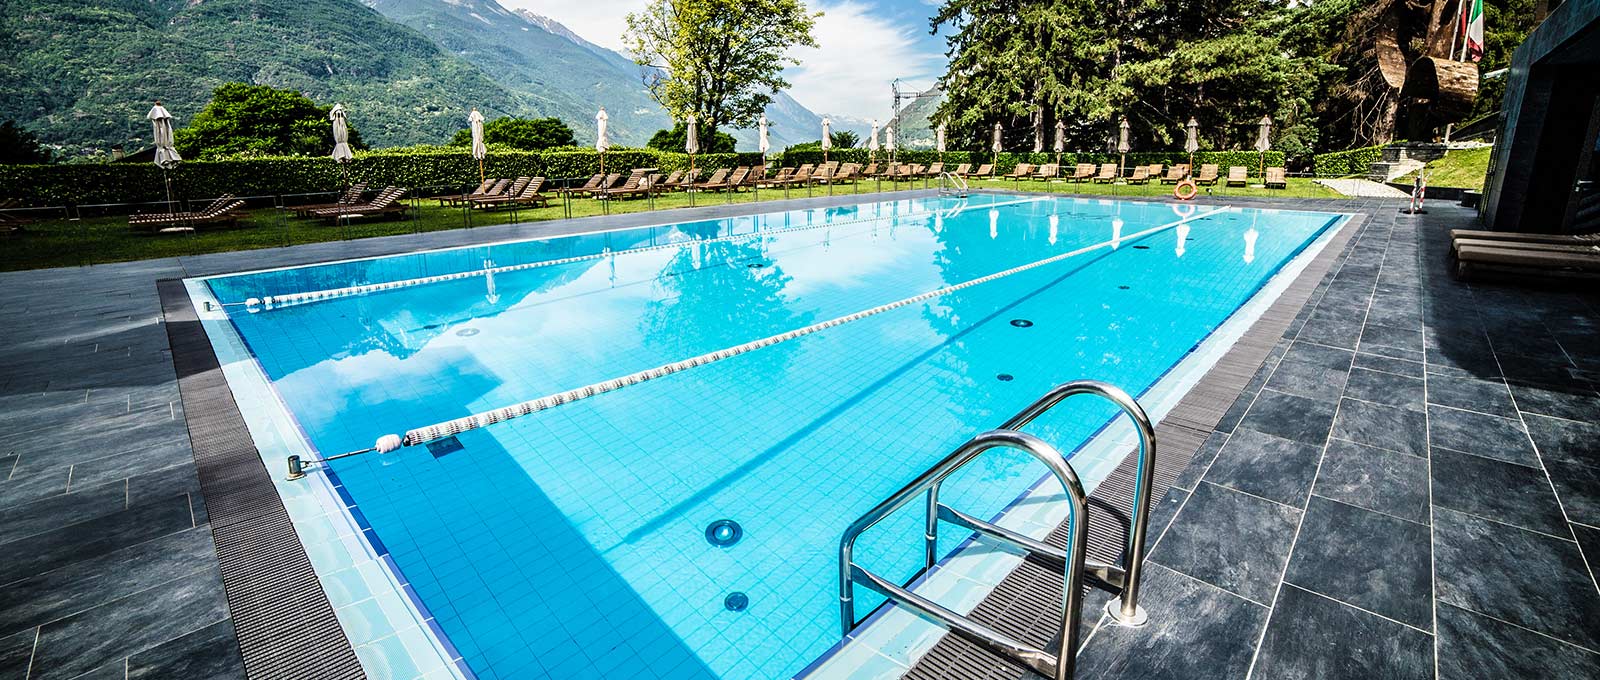 piscina grand hotel billia